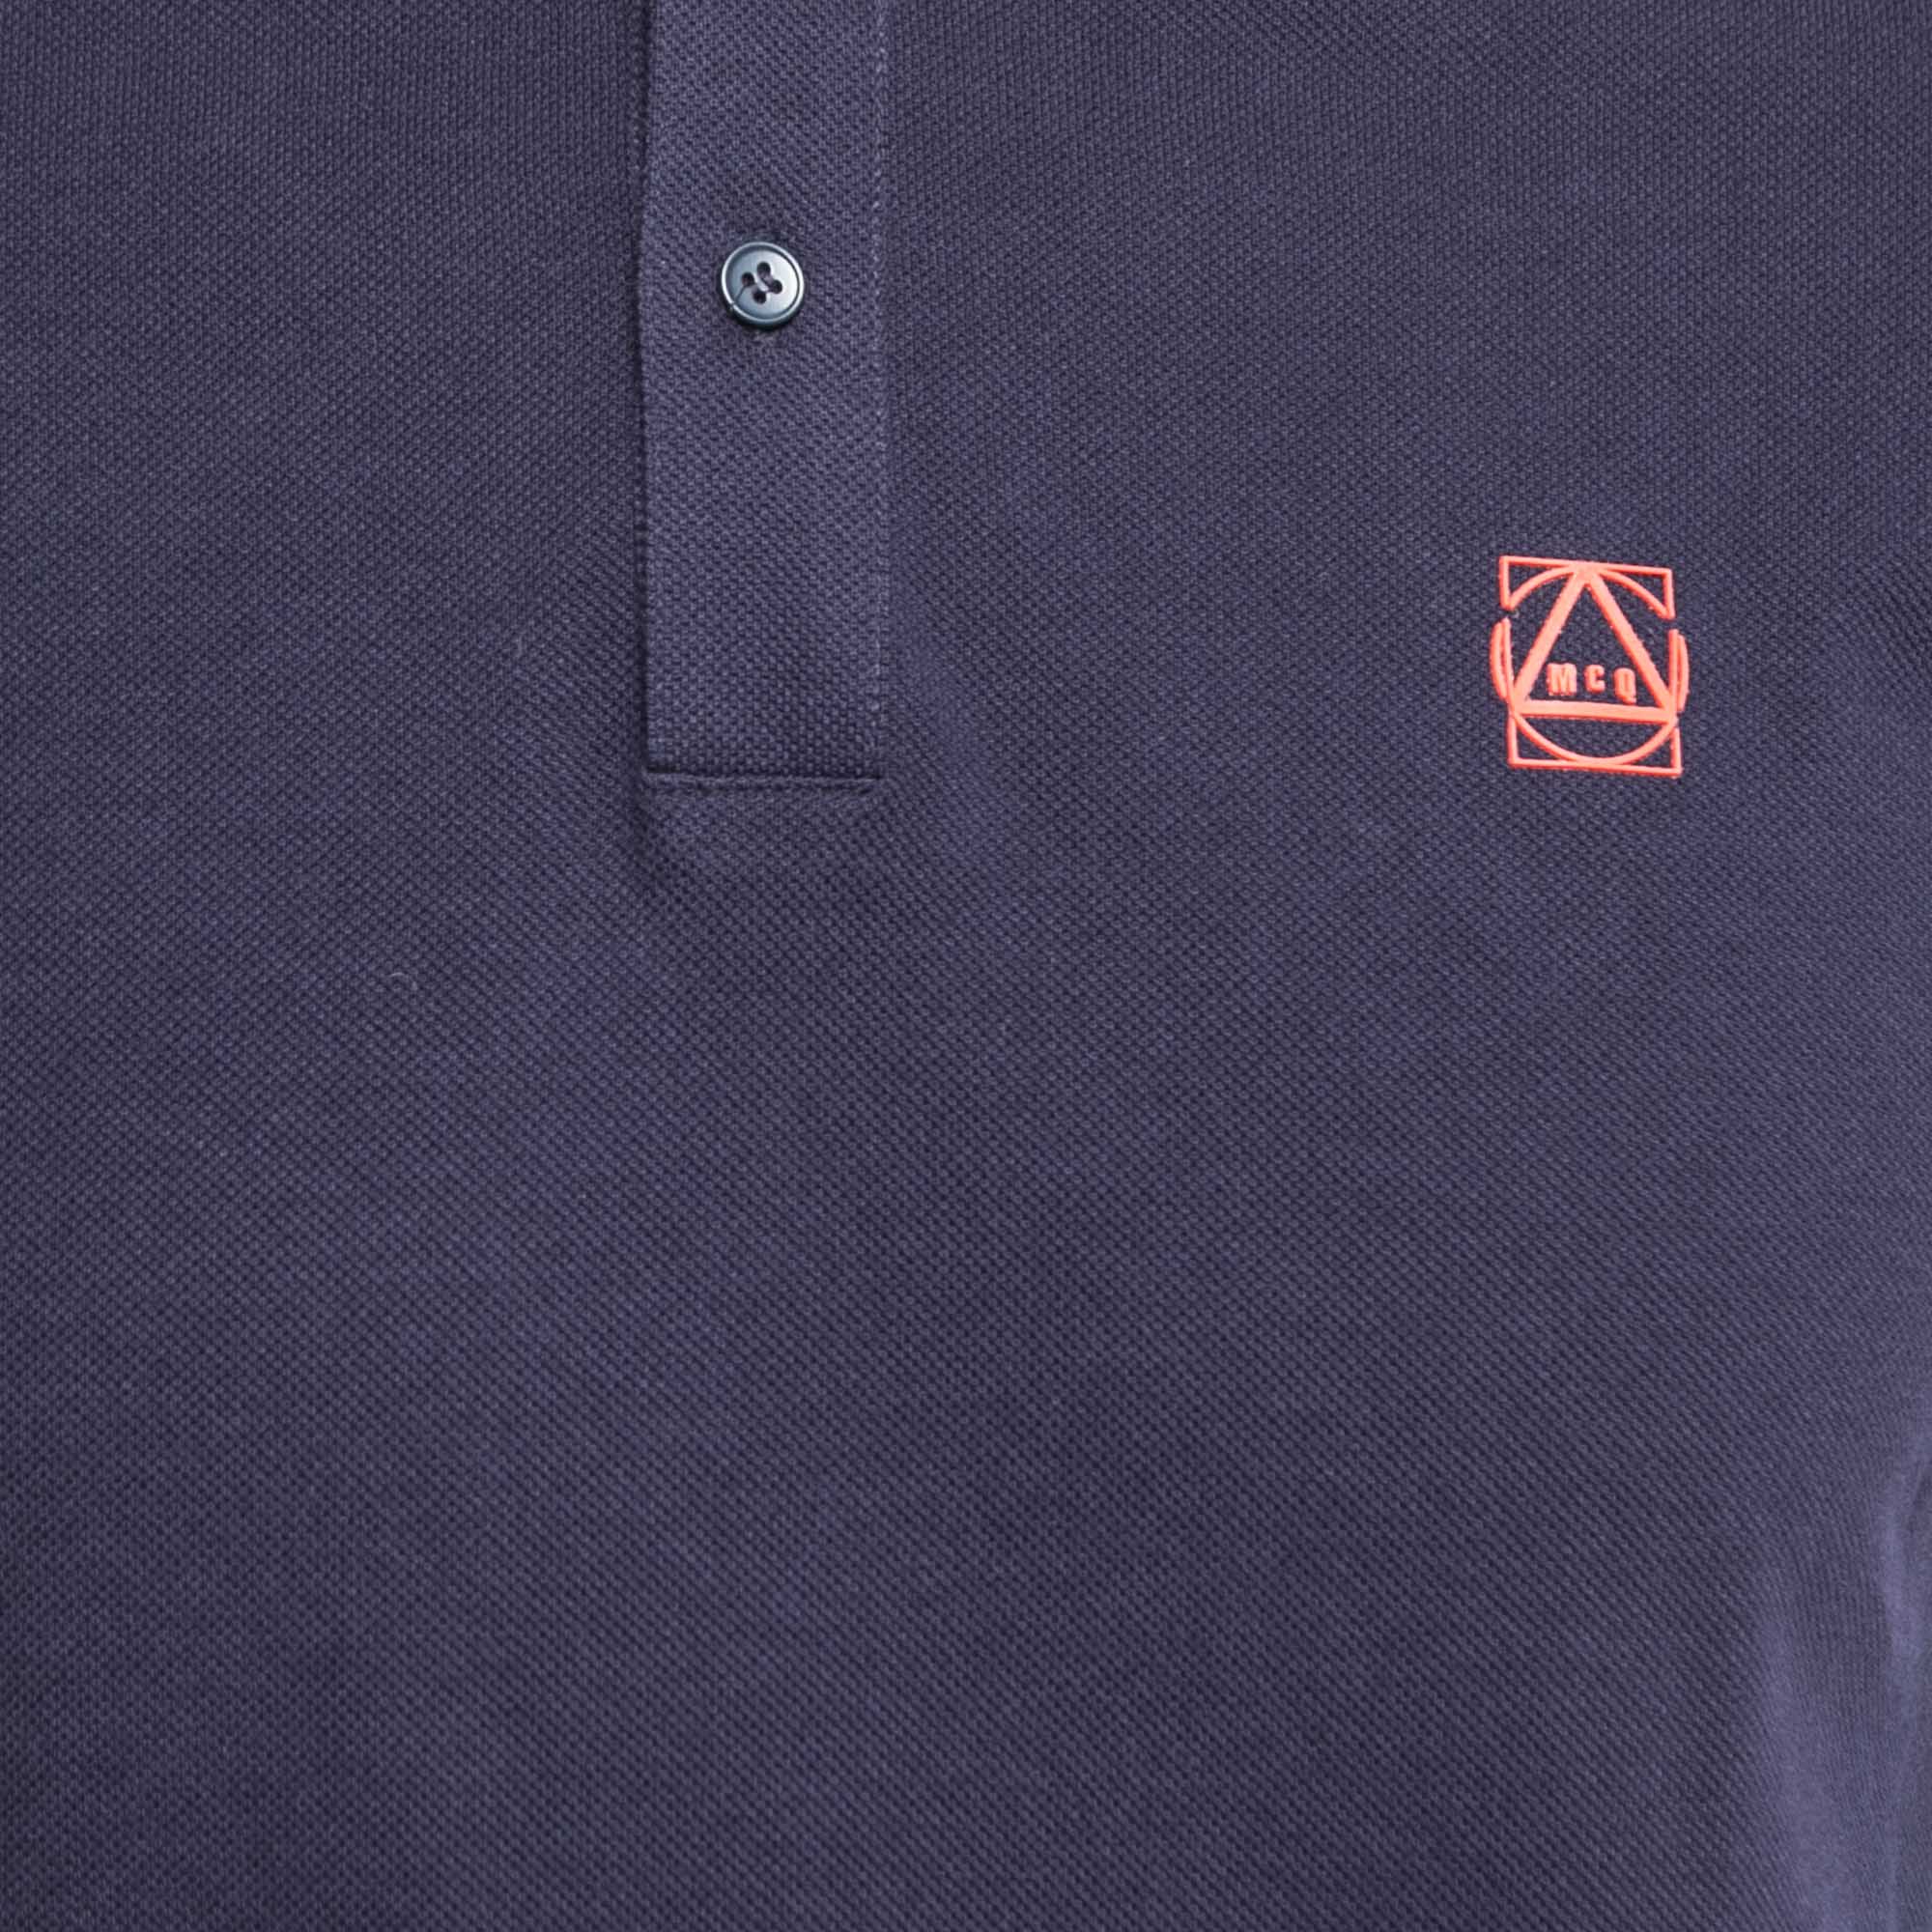 McQ Appliquéd embroidered cotton-piqué polo shirt - ShopStyle